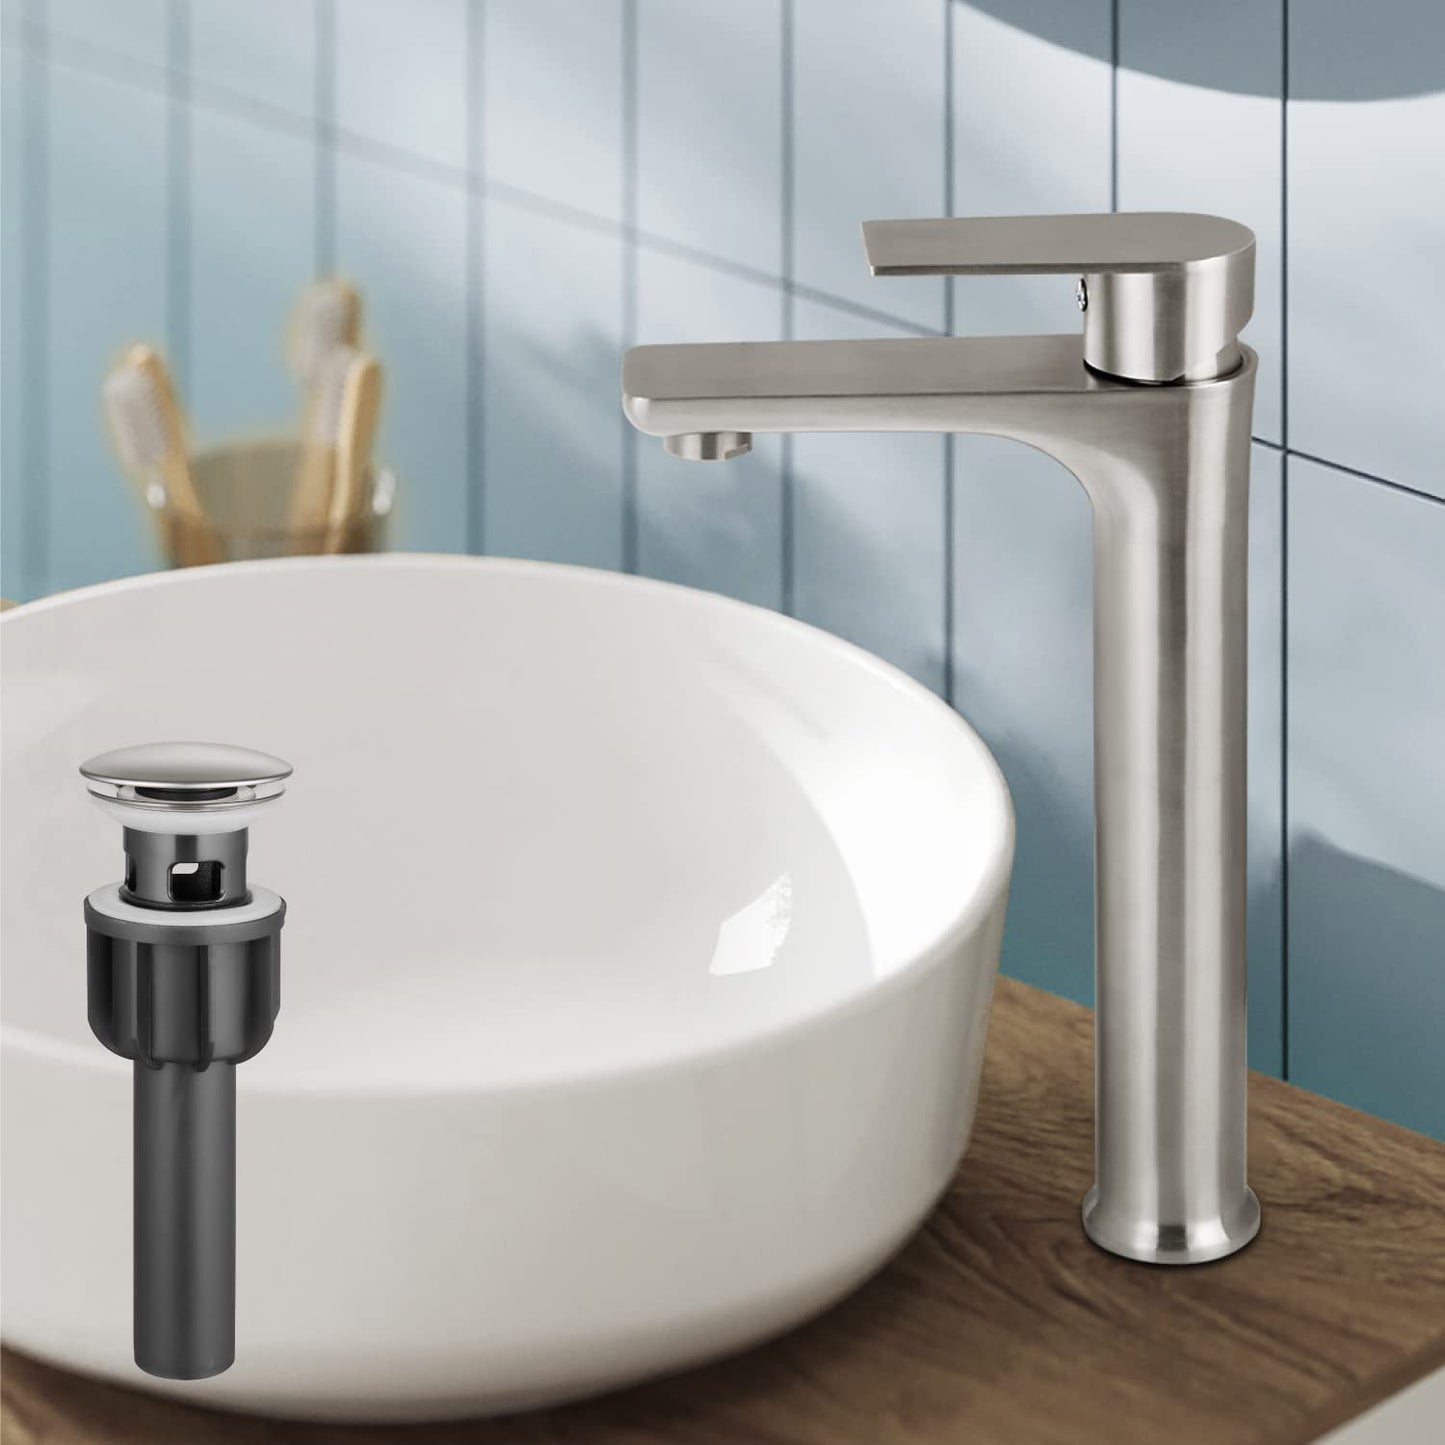 
                  
                    Cinwiny Bathroom Vessel Sink Faucet Tall Spout 1 Handle Single Hole Bathroom Faucets SUS304 Sink Faucet with Pop Up Drain Stopper
                  
                